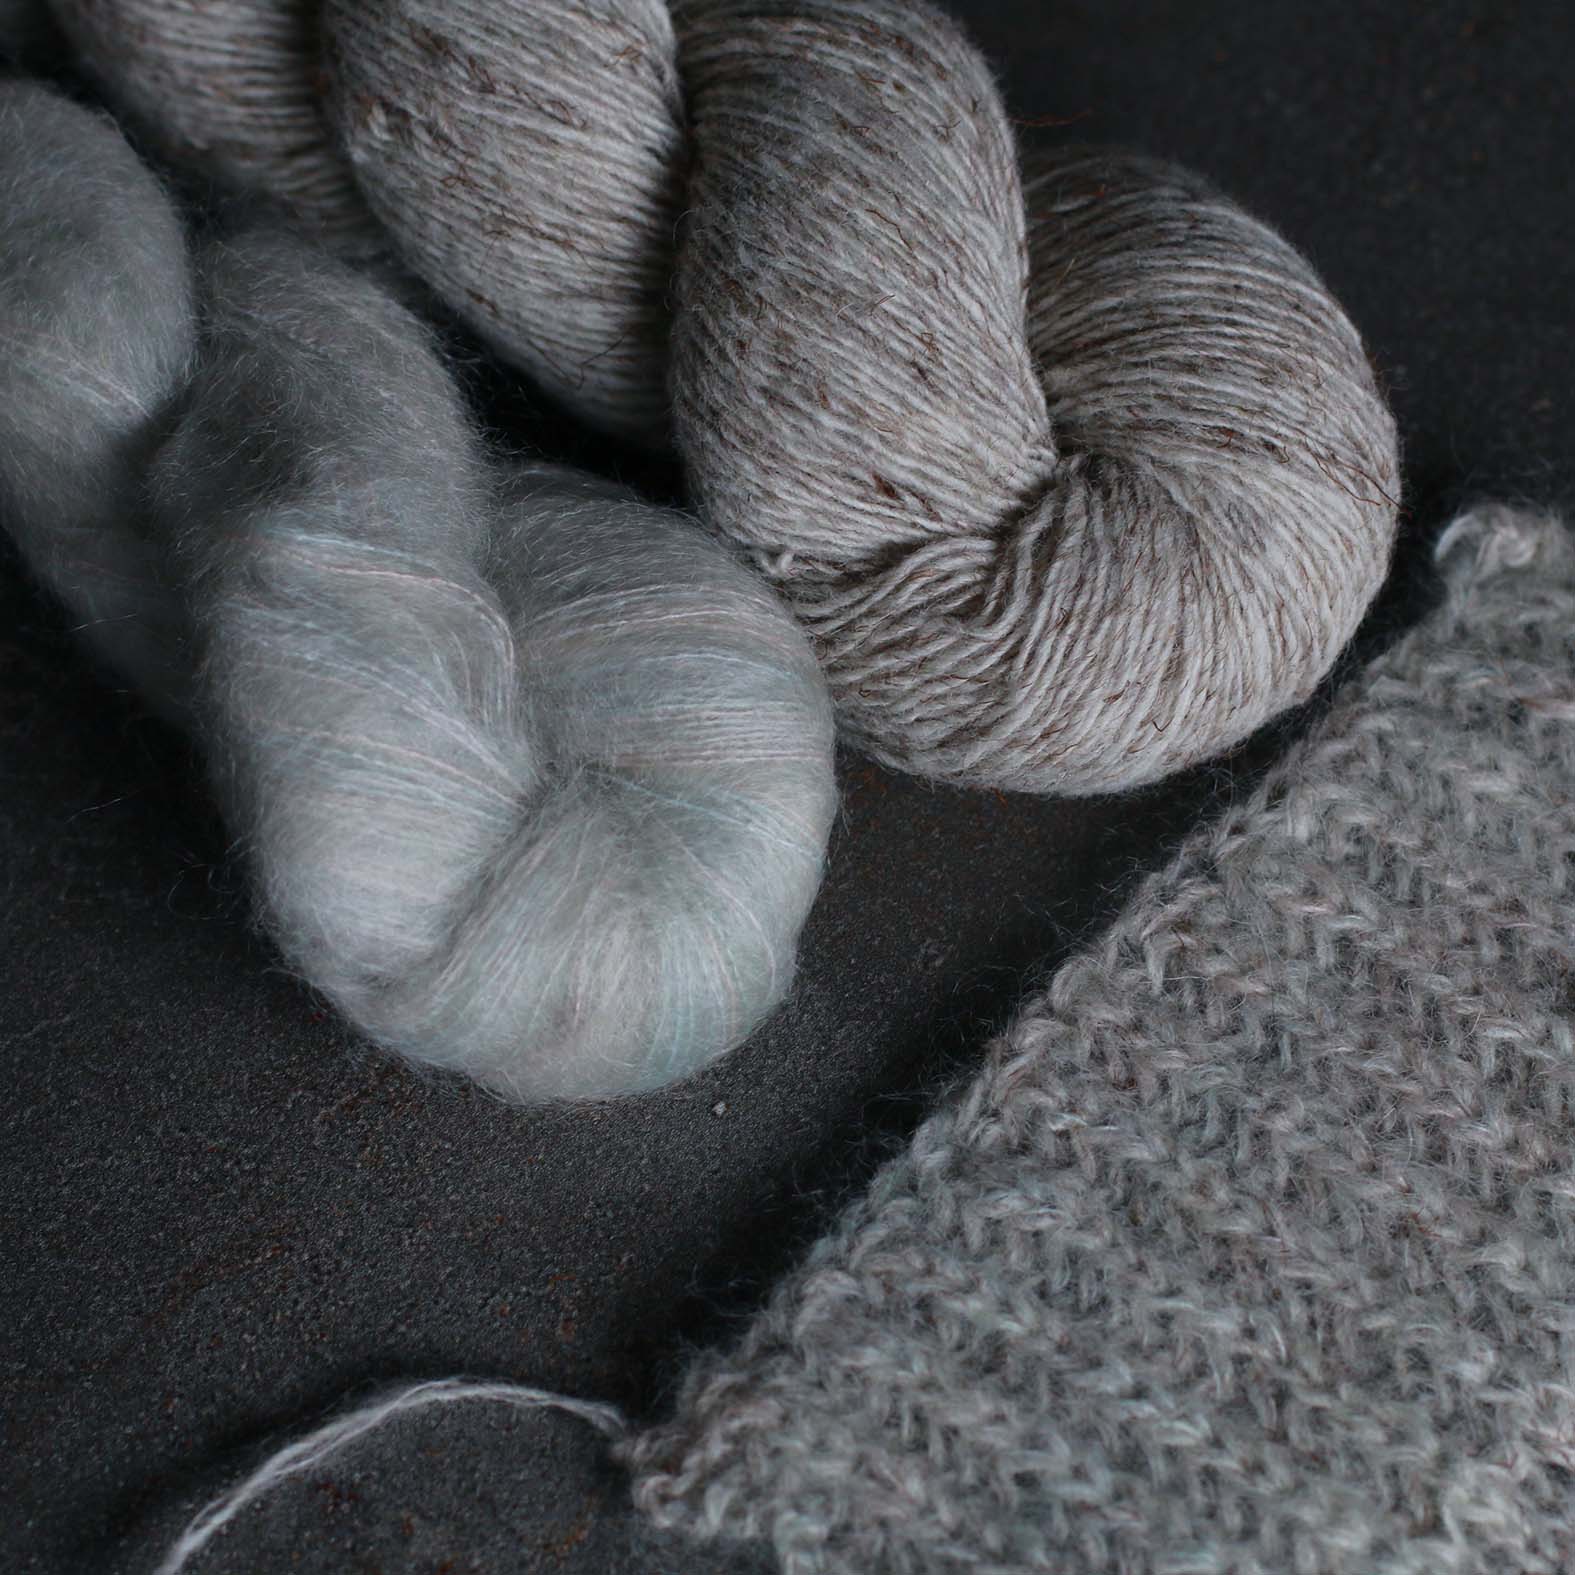 Iascaire Sweater Yarn Kit